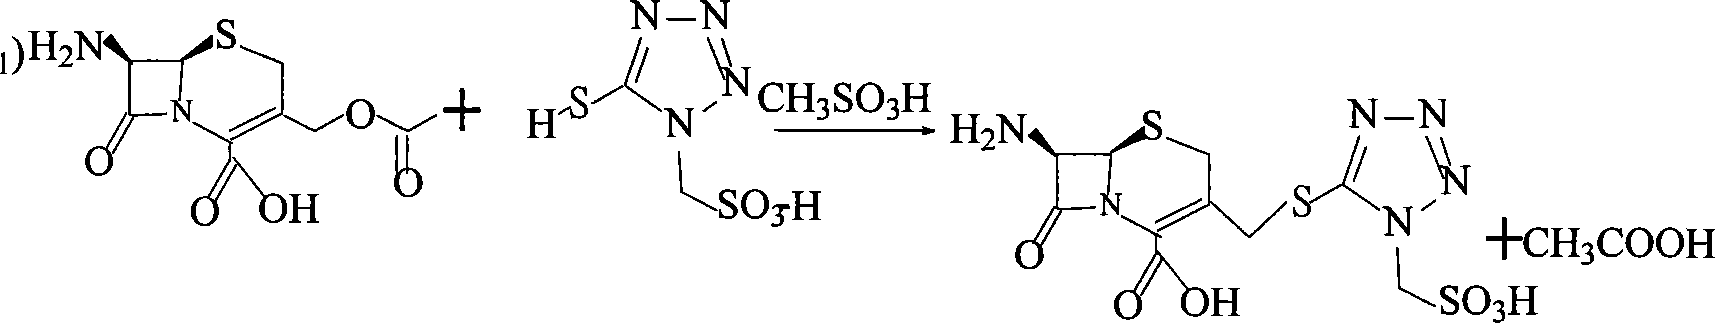 Method for preparing cefonicid or its medicinal salt and intermediate